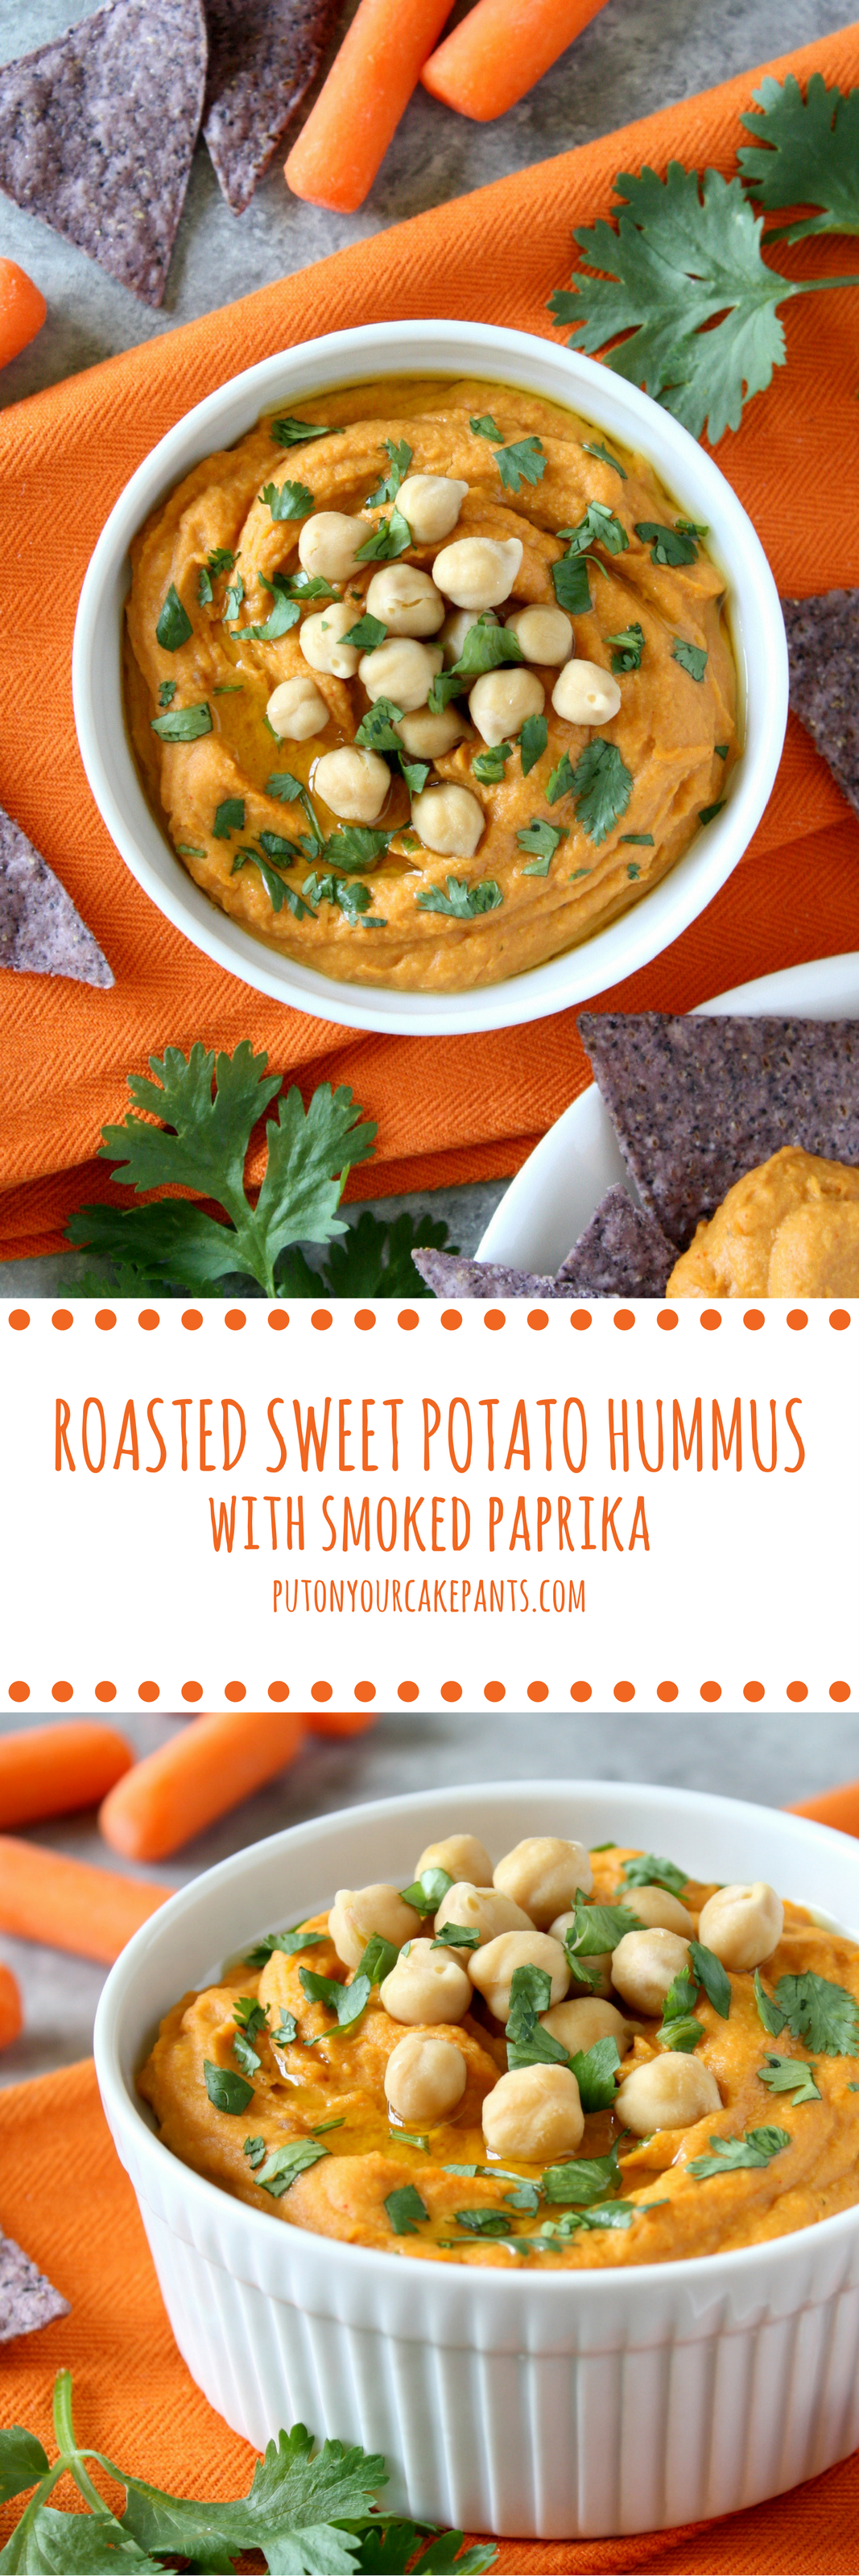 roasted sweet potato hummus